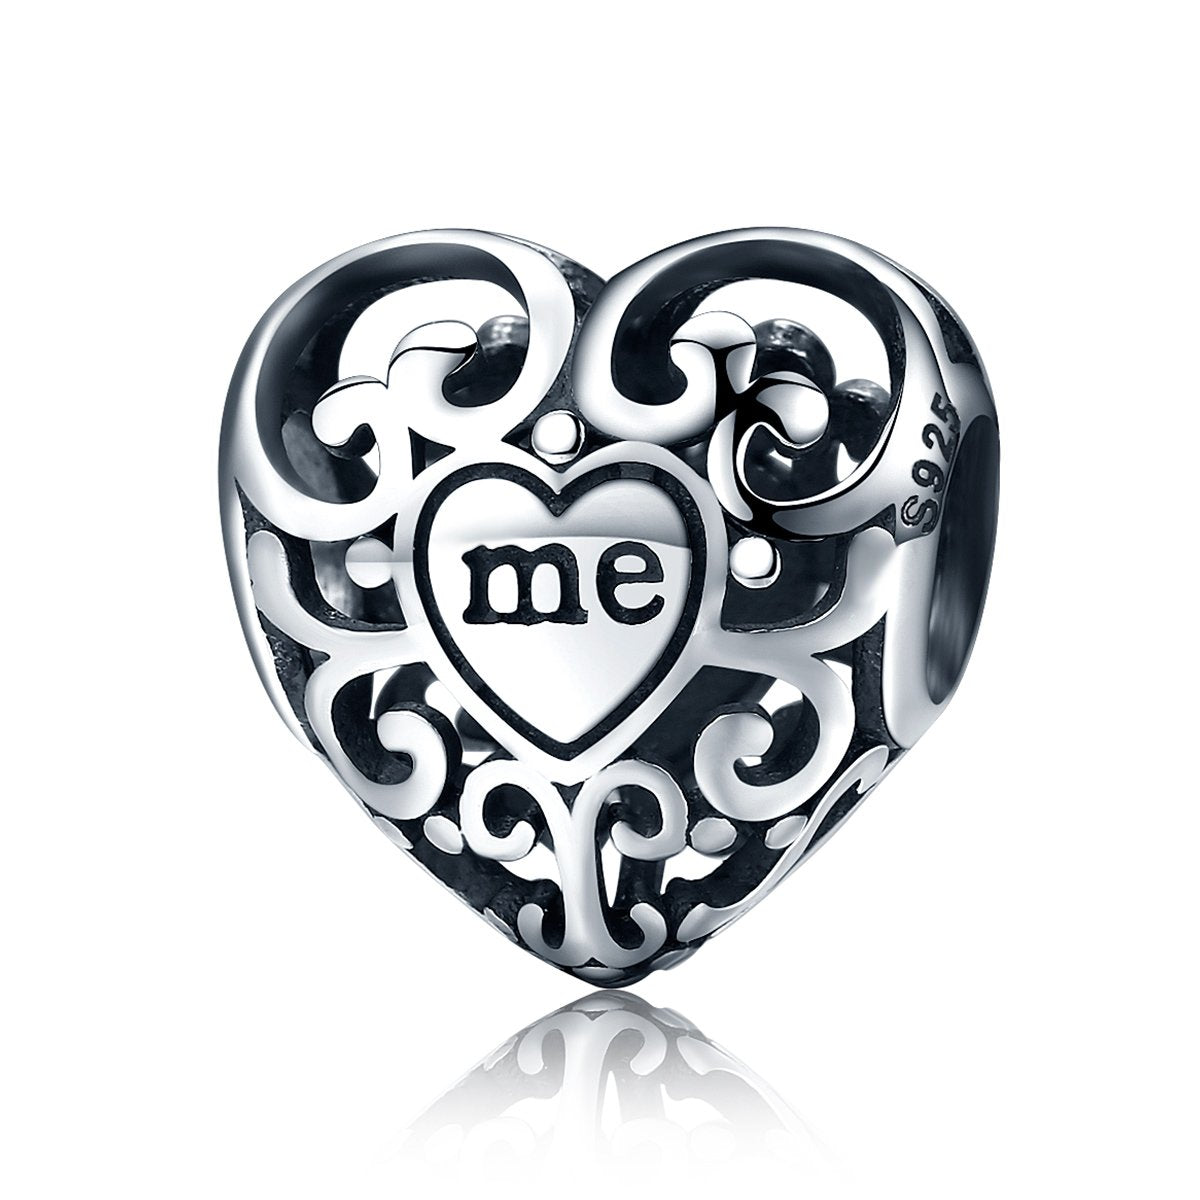 Sterling 925 silver charm heart me bead pendant fits Pandora charm and European charm bracelet Xaxe.com